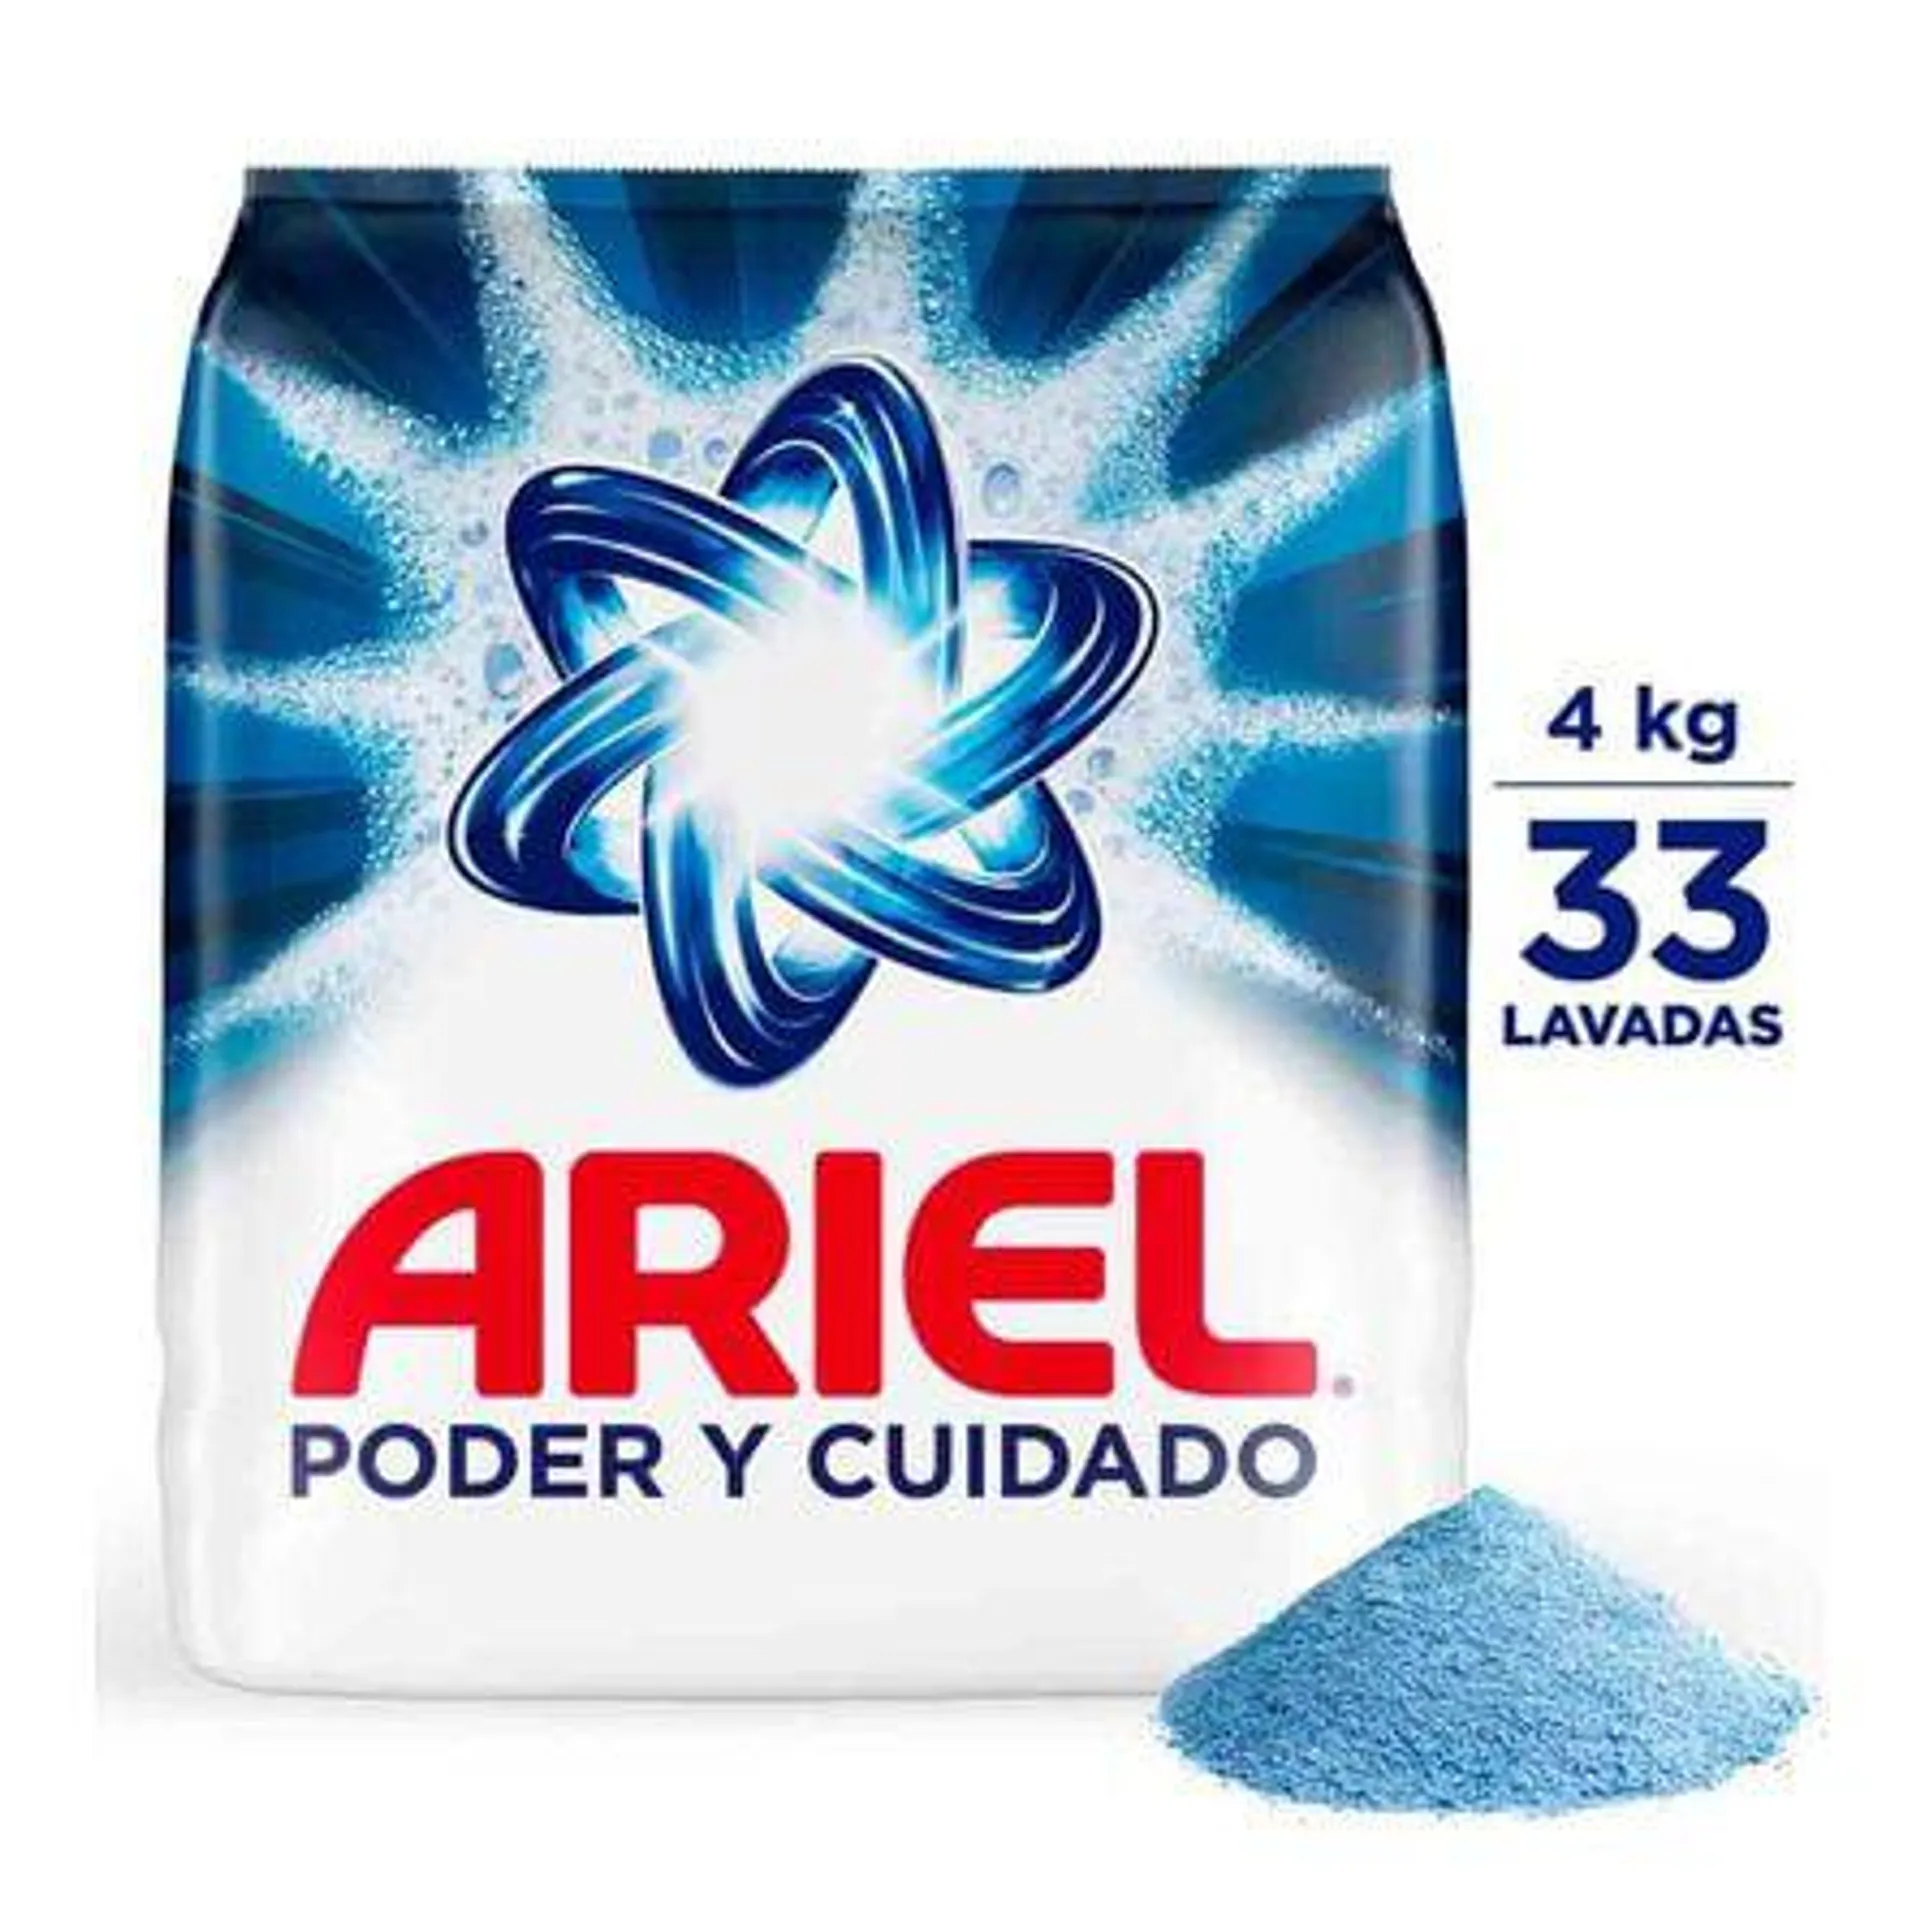 Detergente Ariel Poder y Cuidado Detergente en Polvo 4kg